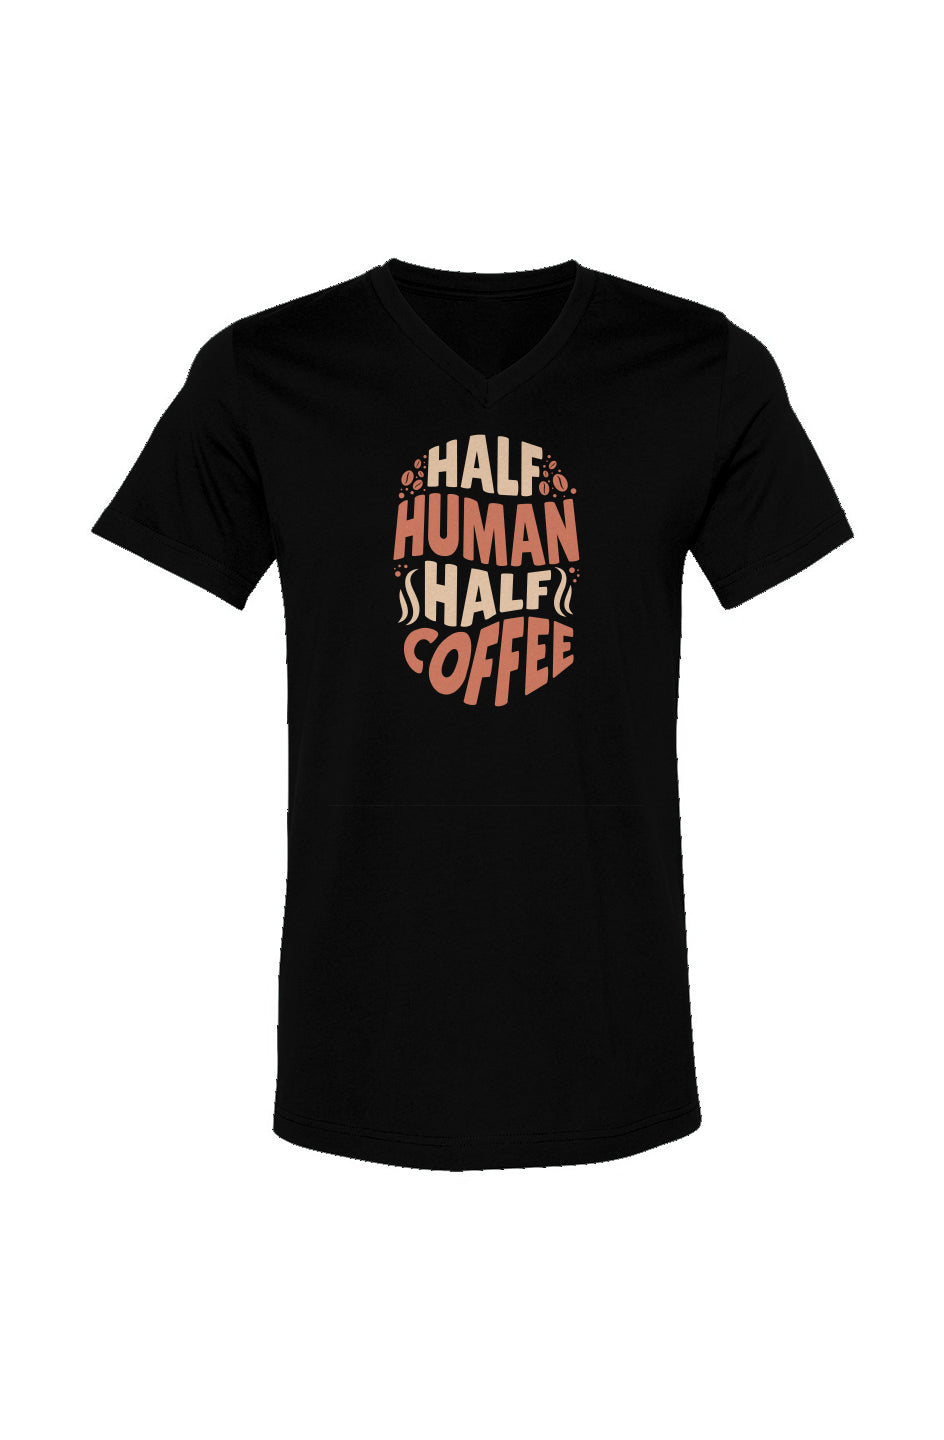 "Half Human, Half Coffee" Unisex Fit 